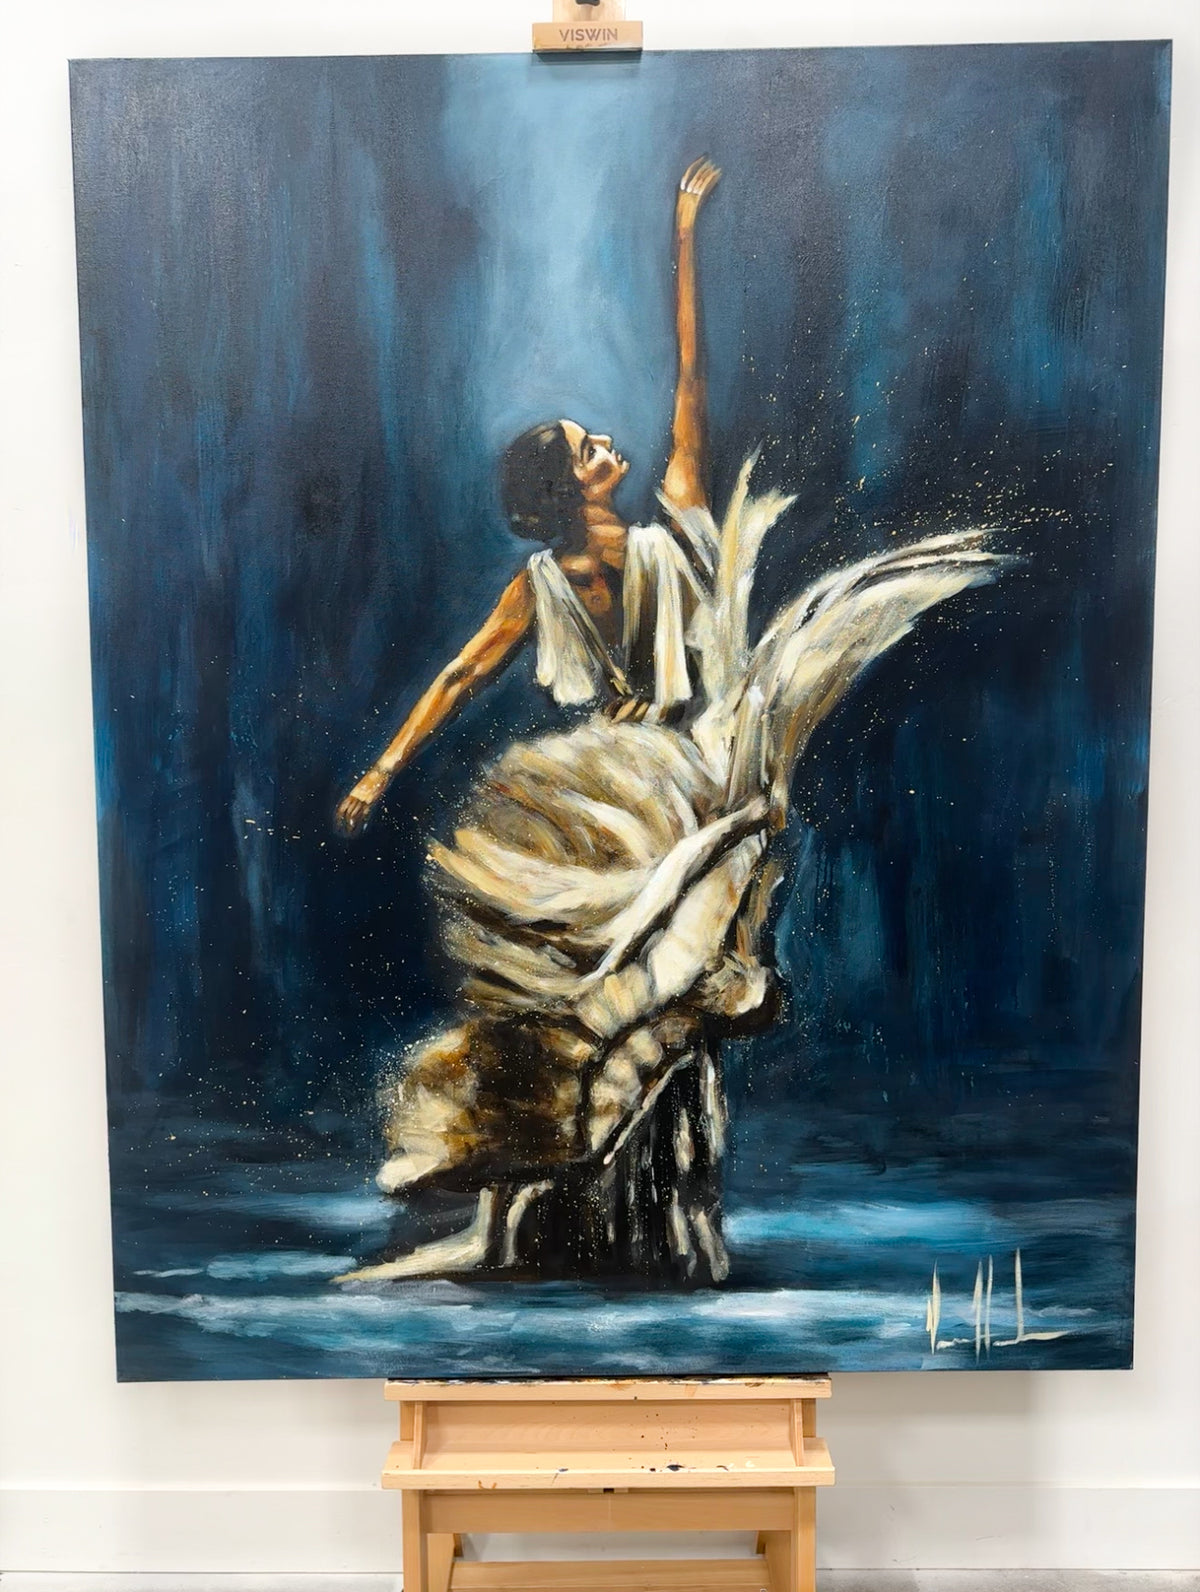 I’ll Praise You Through the Storm - 48”x60” Original Acrylic Painting